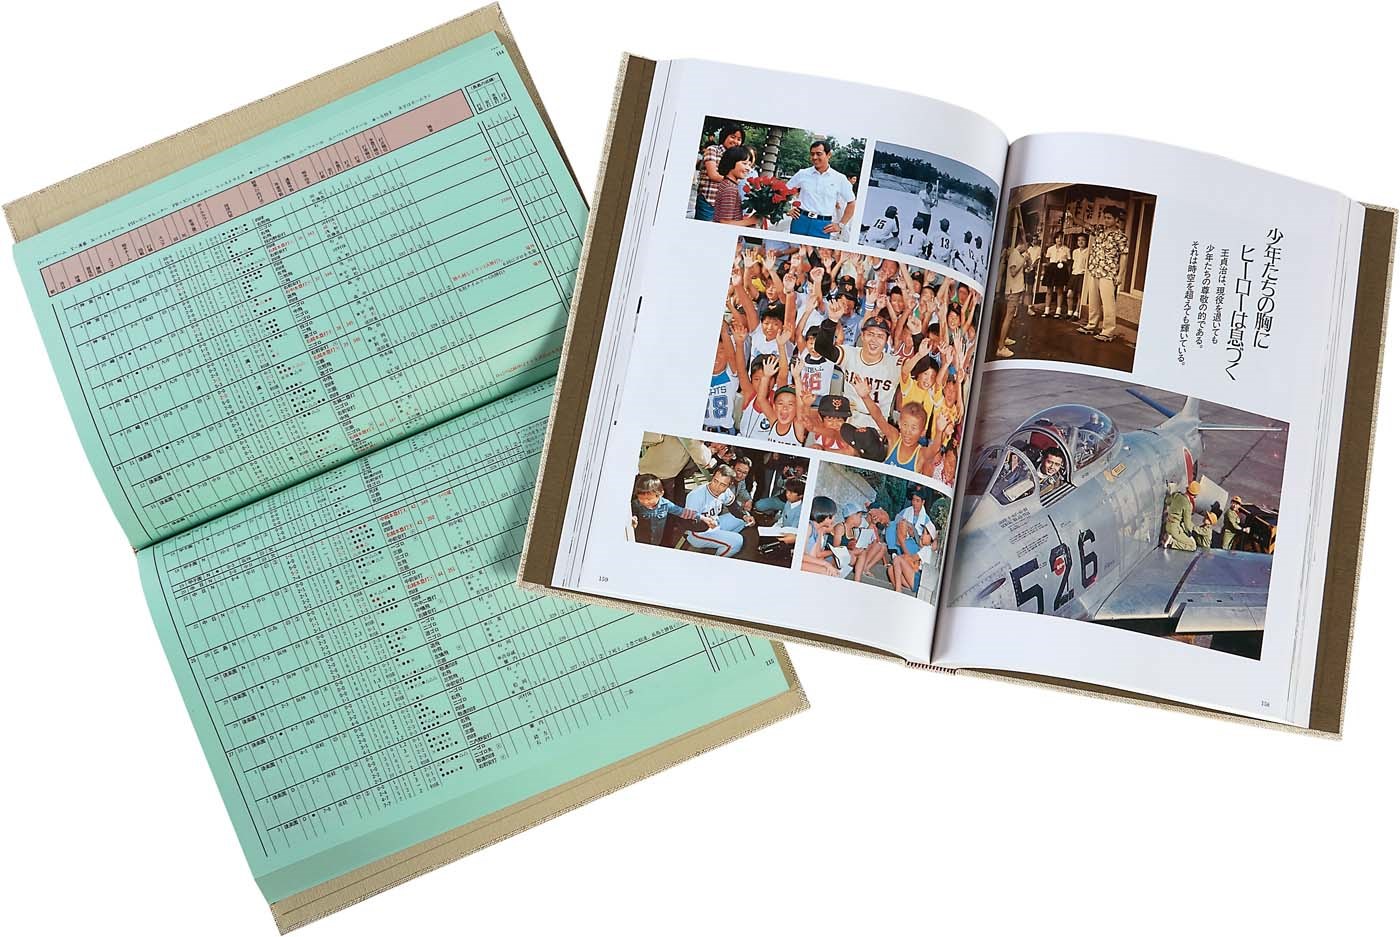 - 1989 Sadaharu Oh Limited Edition Complete Manuscript "The Big One"